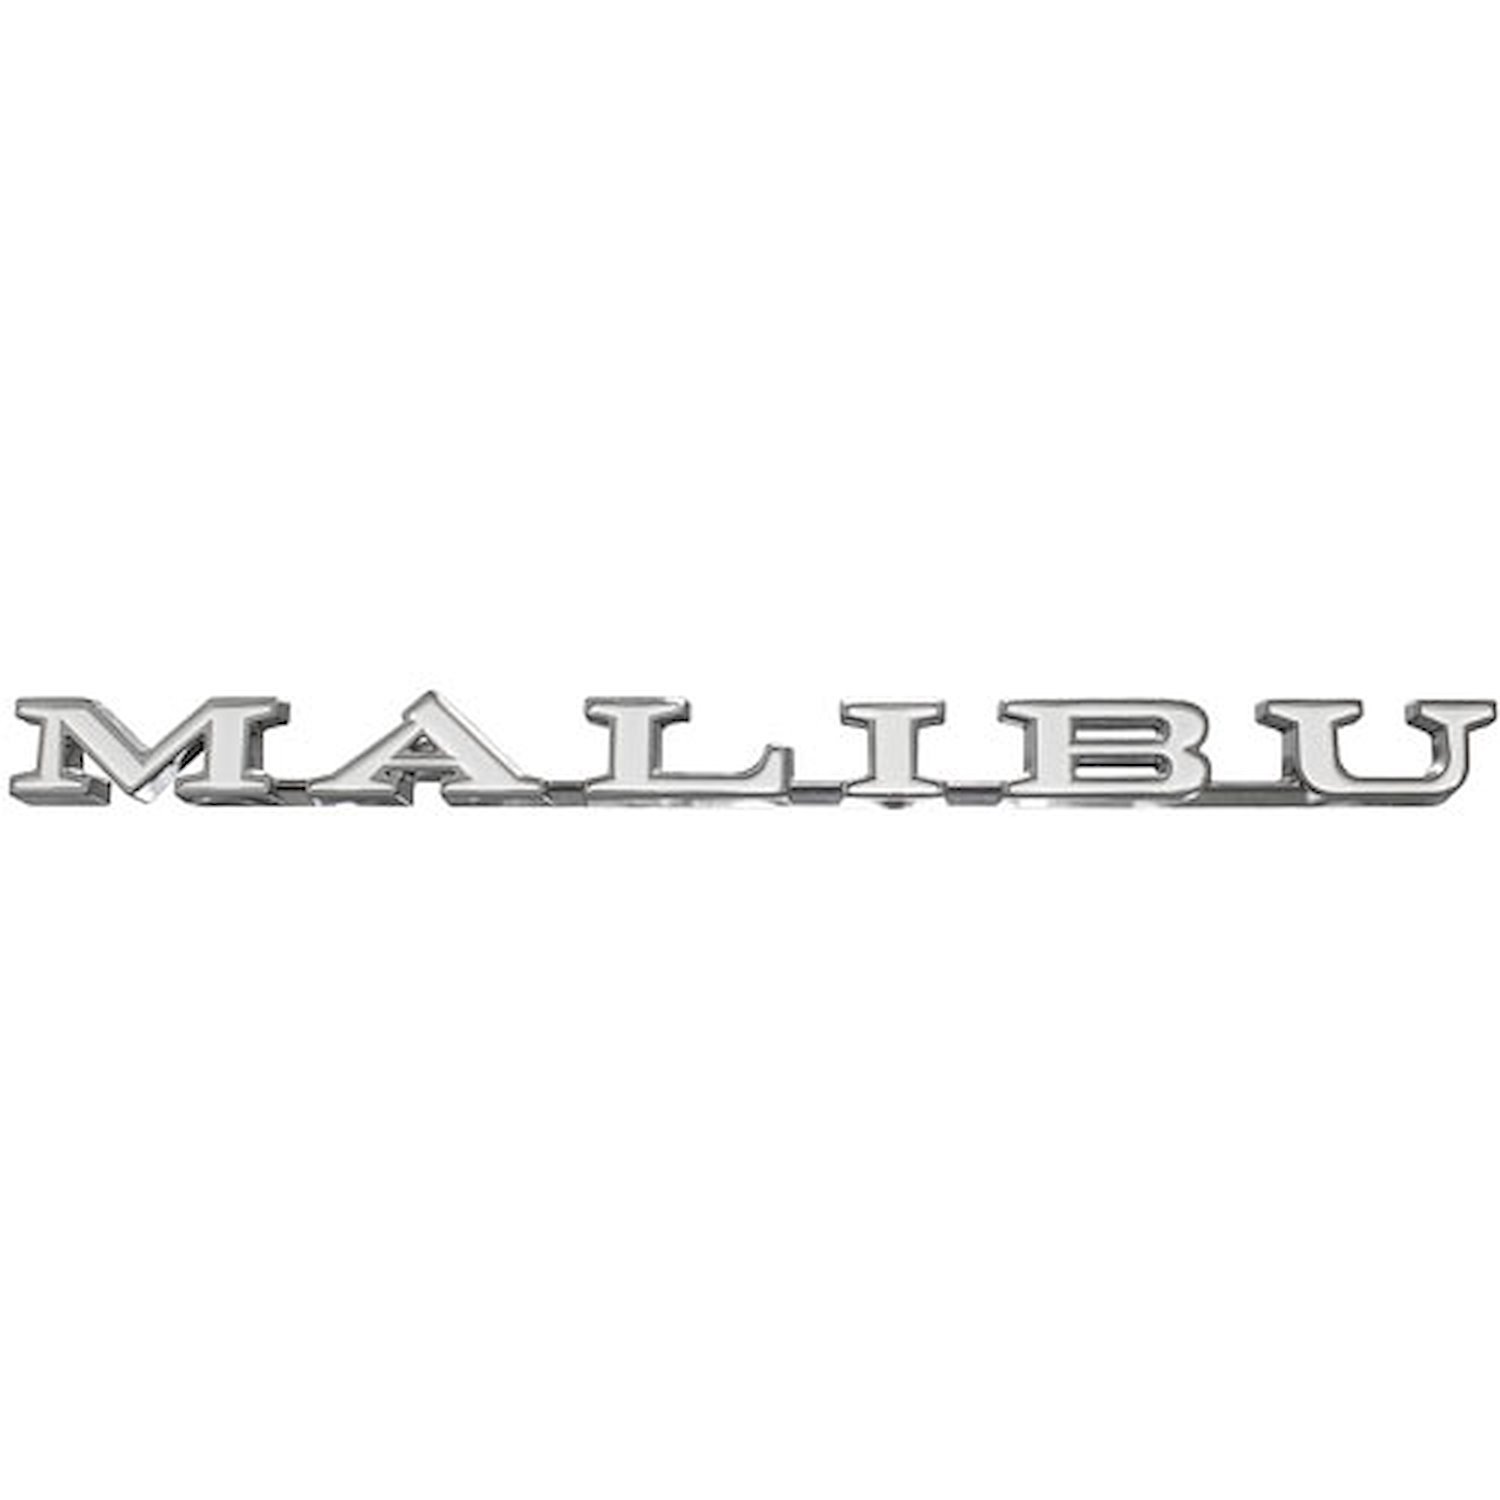 "Malibu" Fender Emblem 1971-73 Chevelle